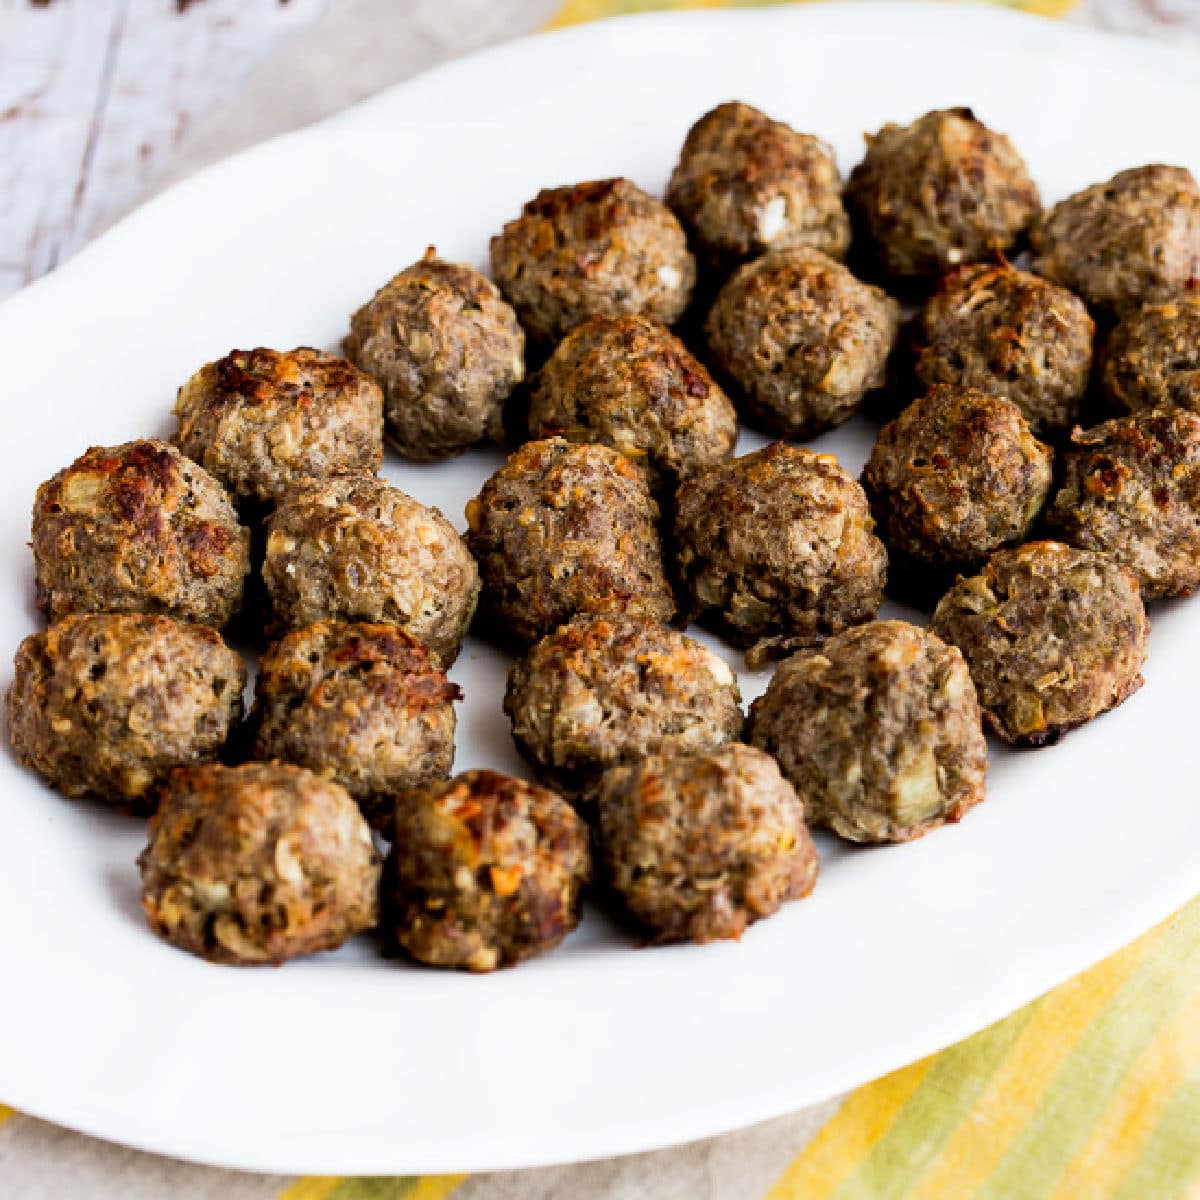 Square image for Baked Greek Meatballs with Feta shown on serving platter.